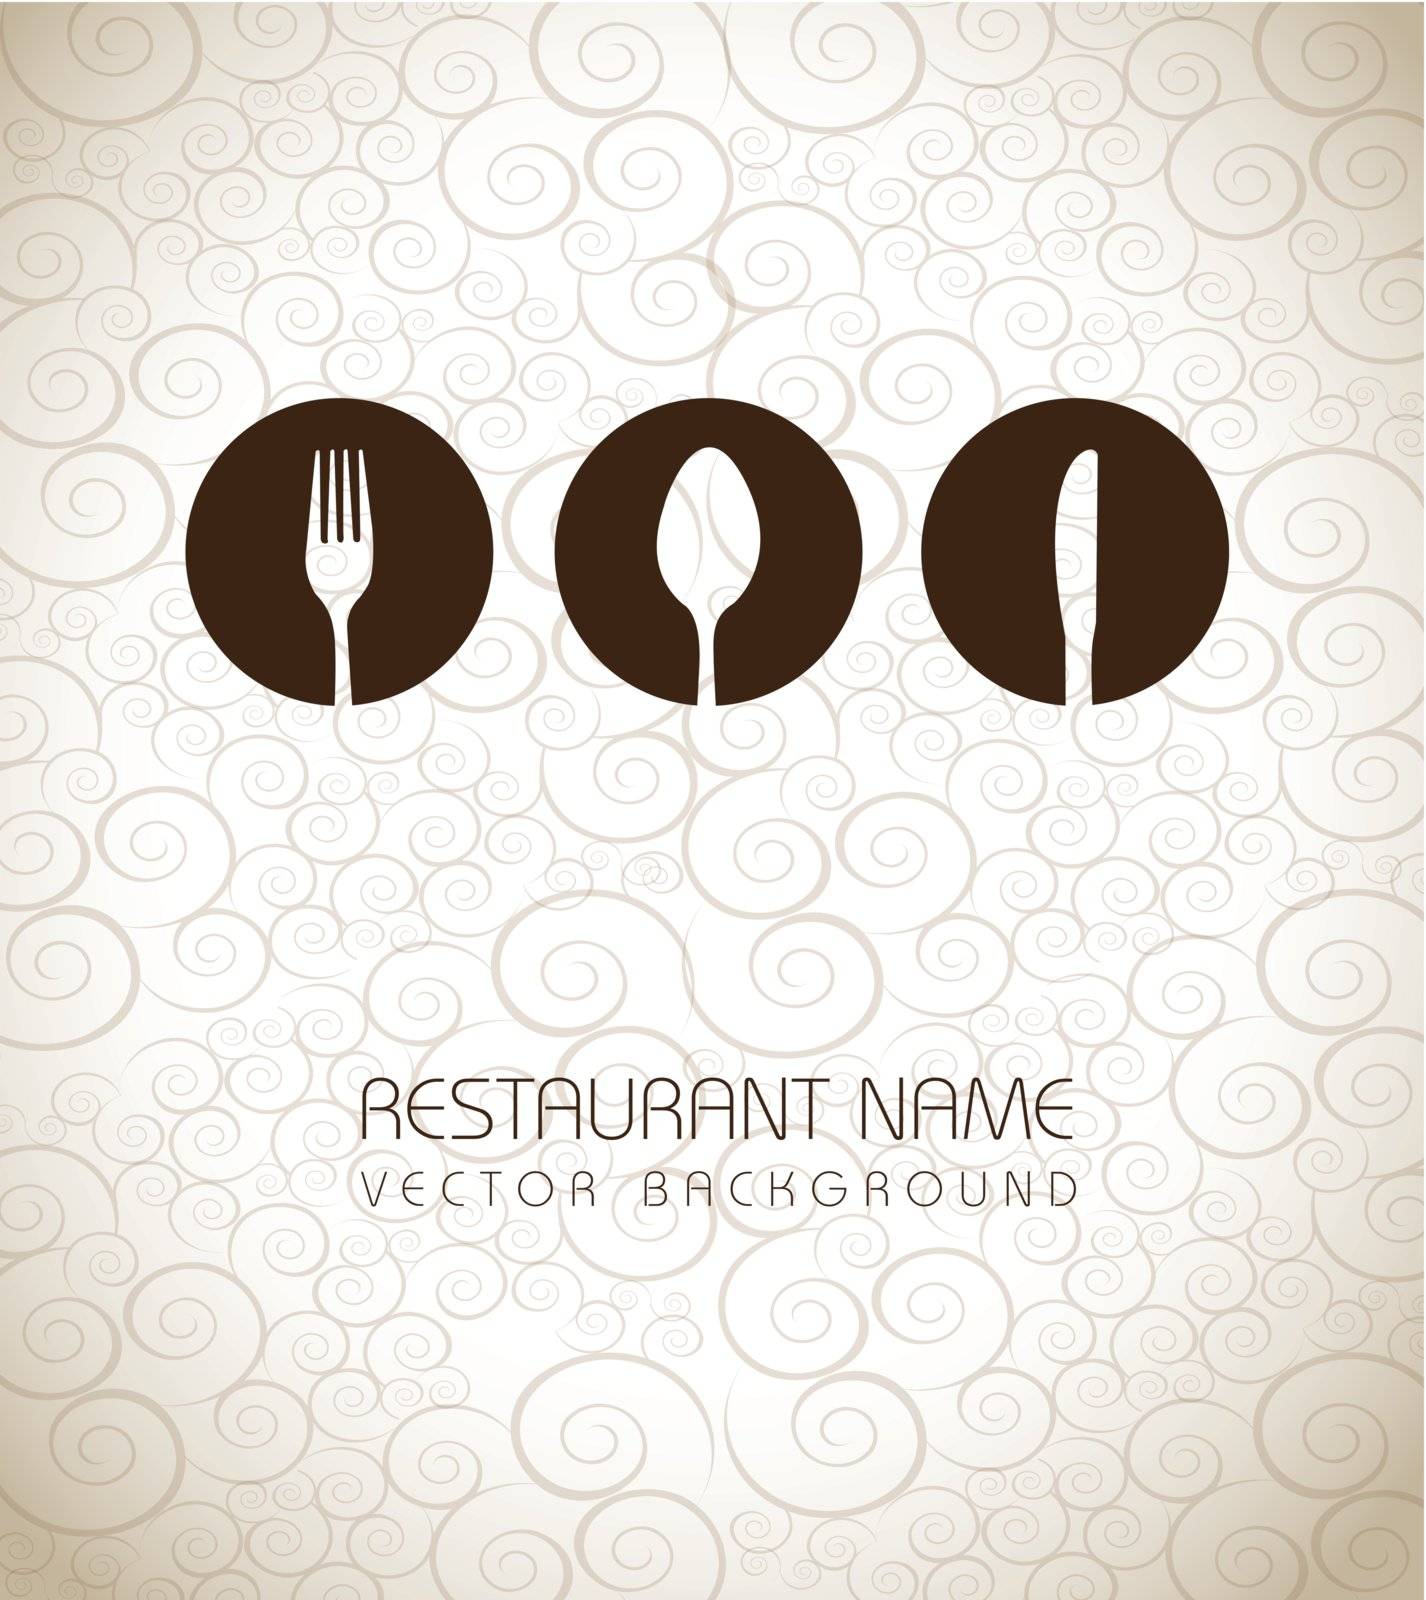 Restaurant icons over vintage background vector illustration